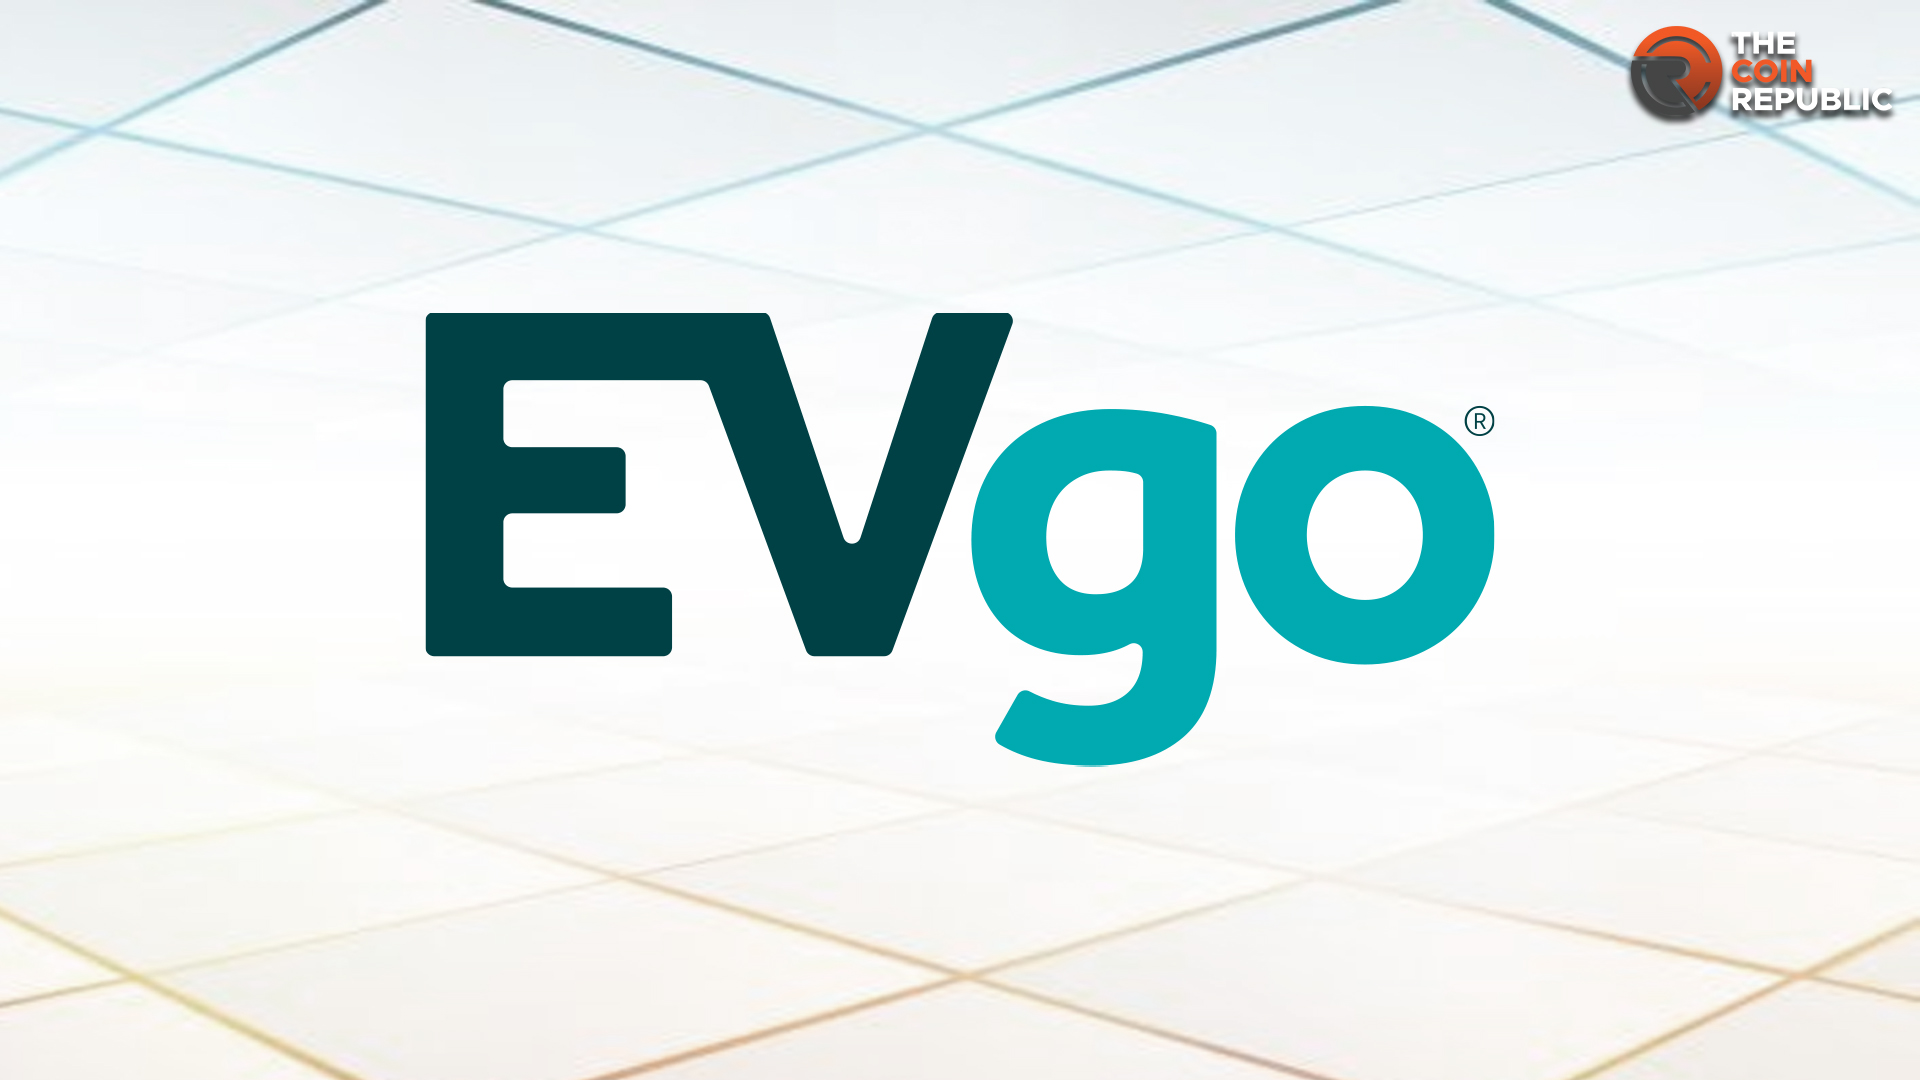 EVGO Stock: Will EVGO Stock Able to Defend 52-Week Low?